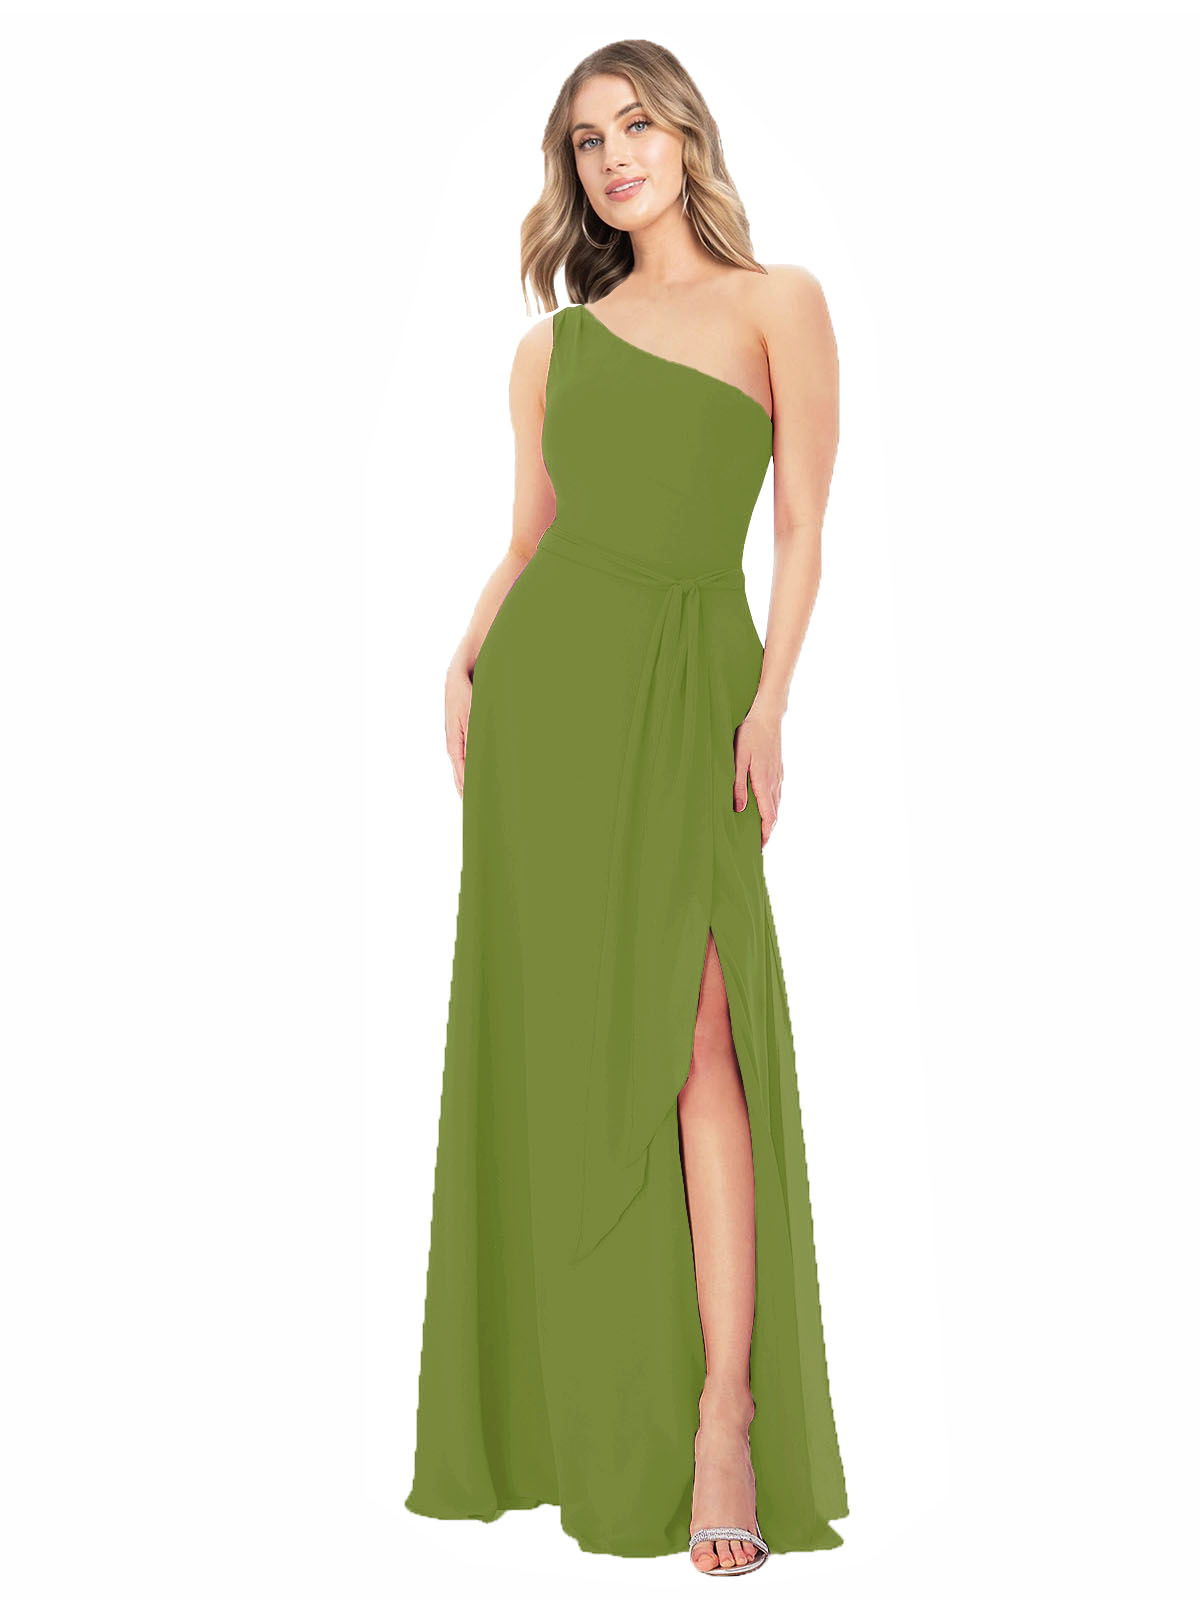 Olive Green A-Line One Shoulder Sleeveless Long Bridesmaid Dress Doris